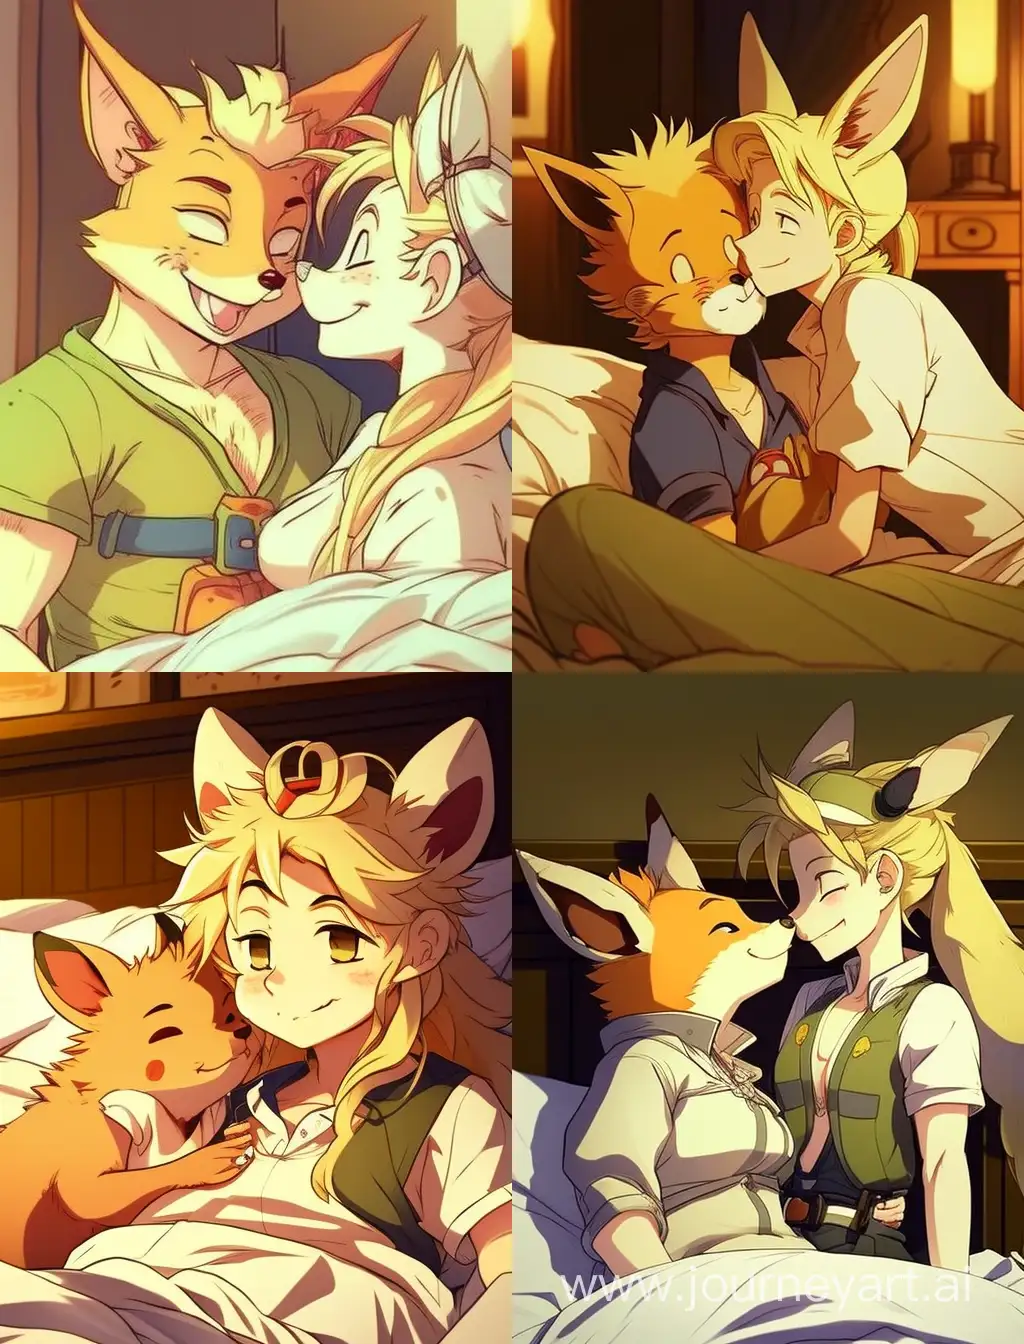 Anime-Furry-Bandicoot-Love-Scene-Blonde-Innkeeper-and-Guy-Kissing-Near-Bed